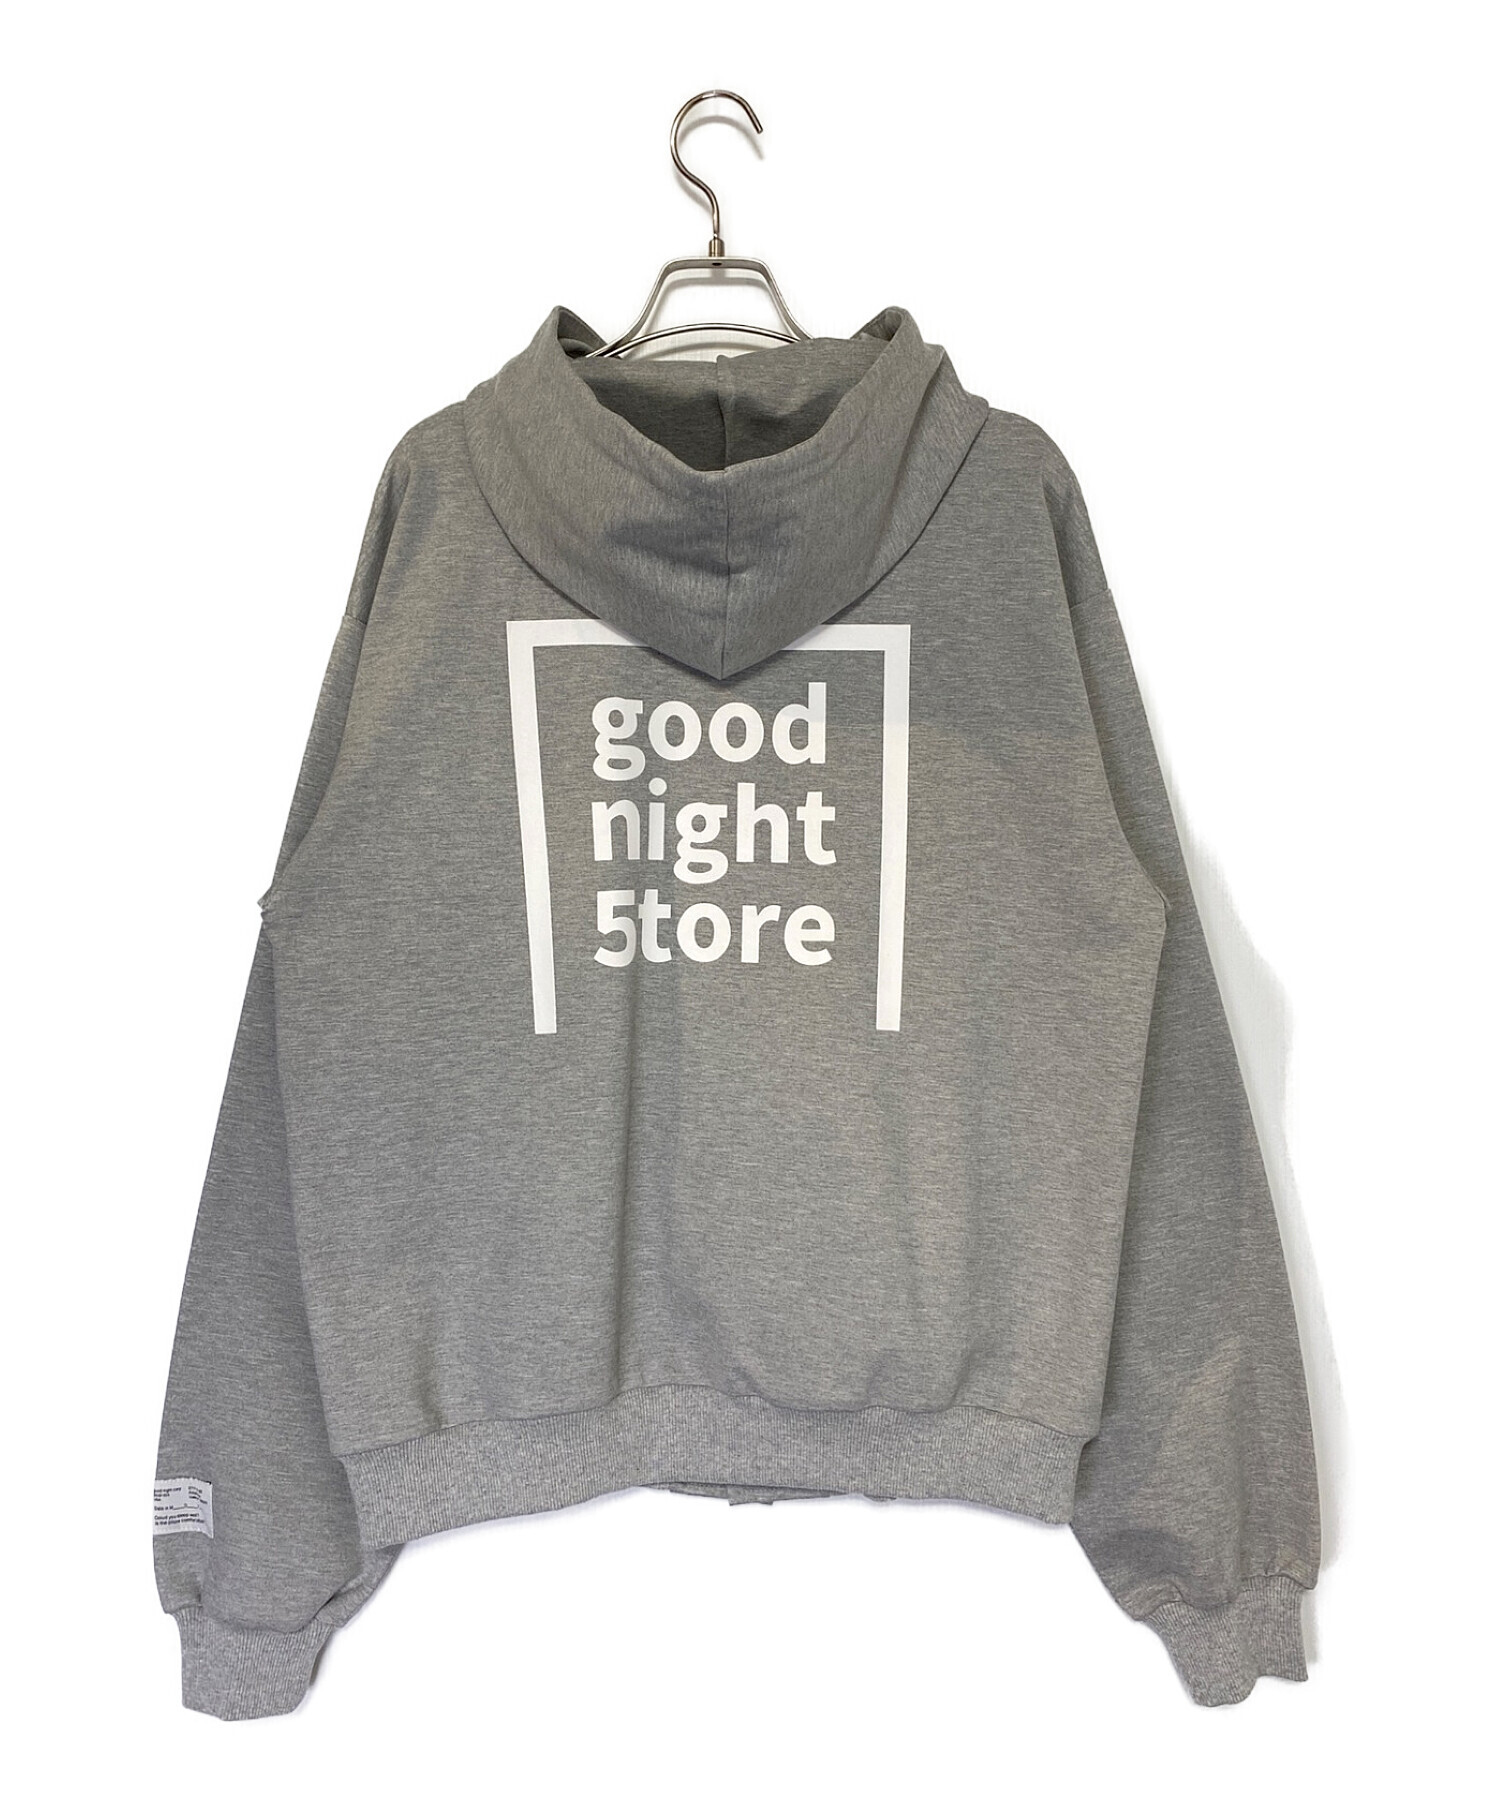 goodnight5tore - Tシャツ